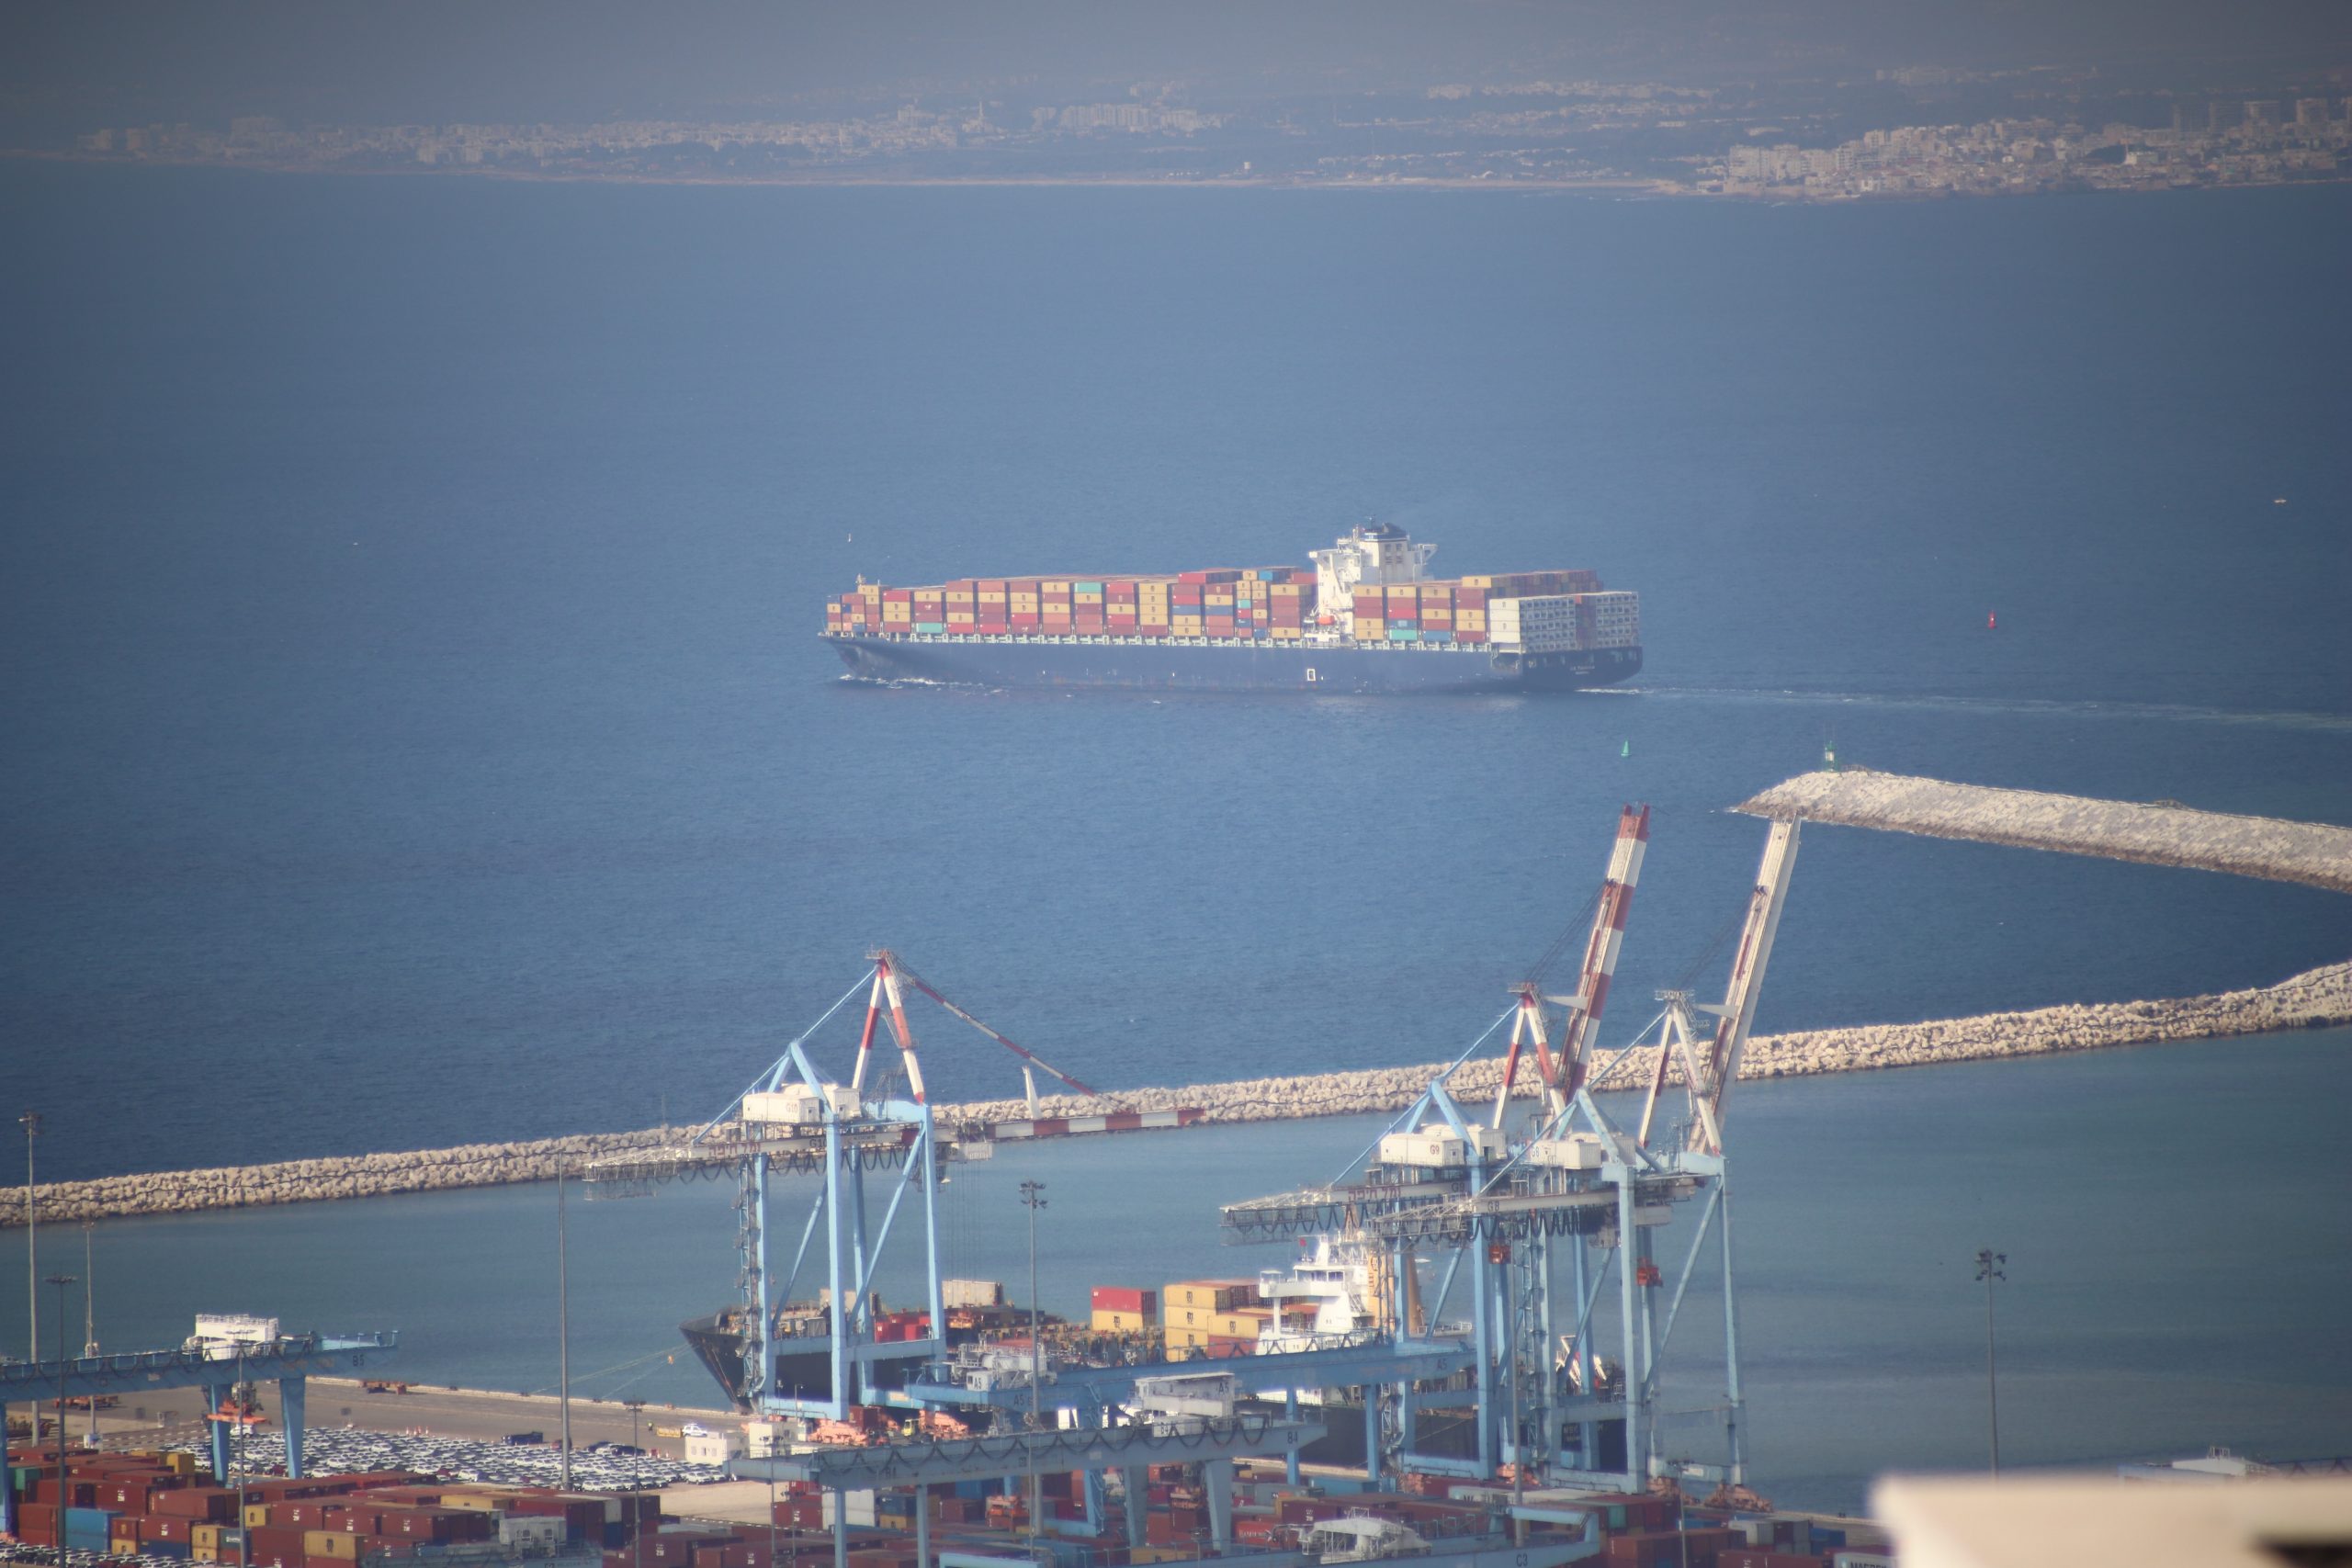 Haifa: A Tale of Two Ports